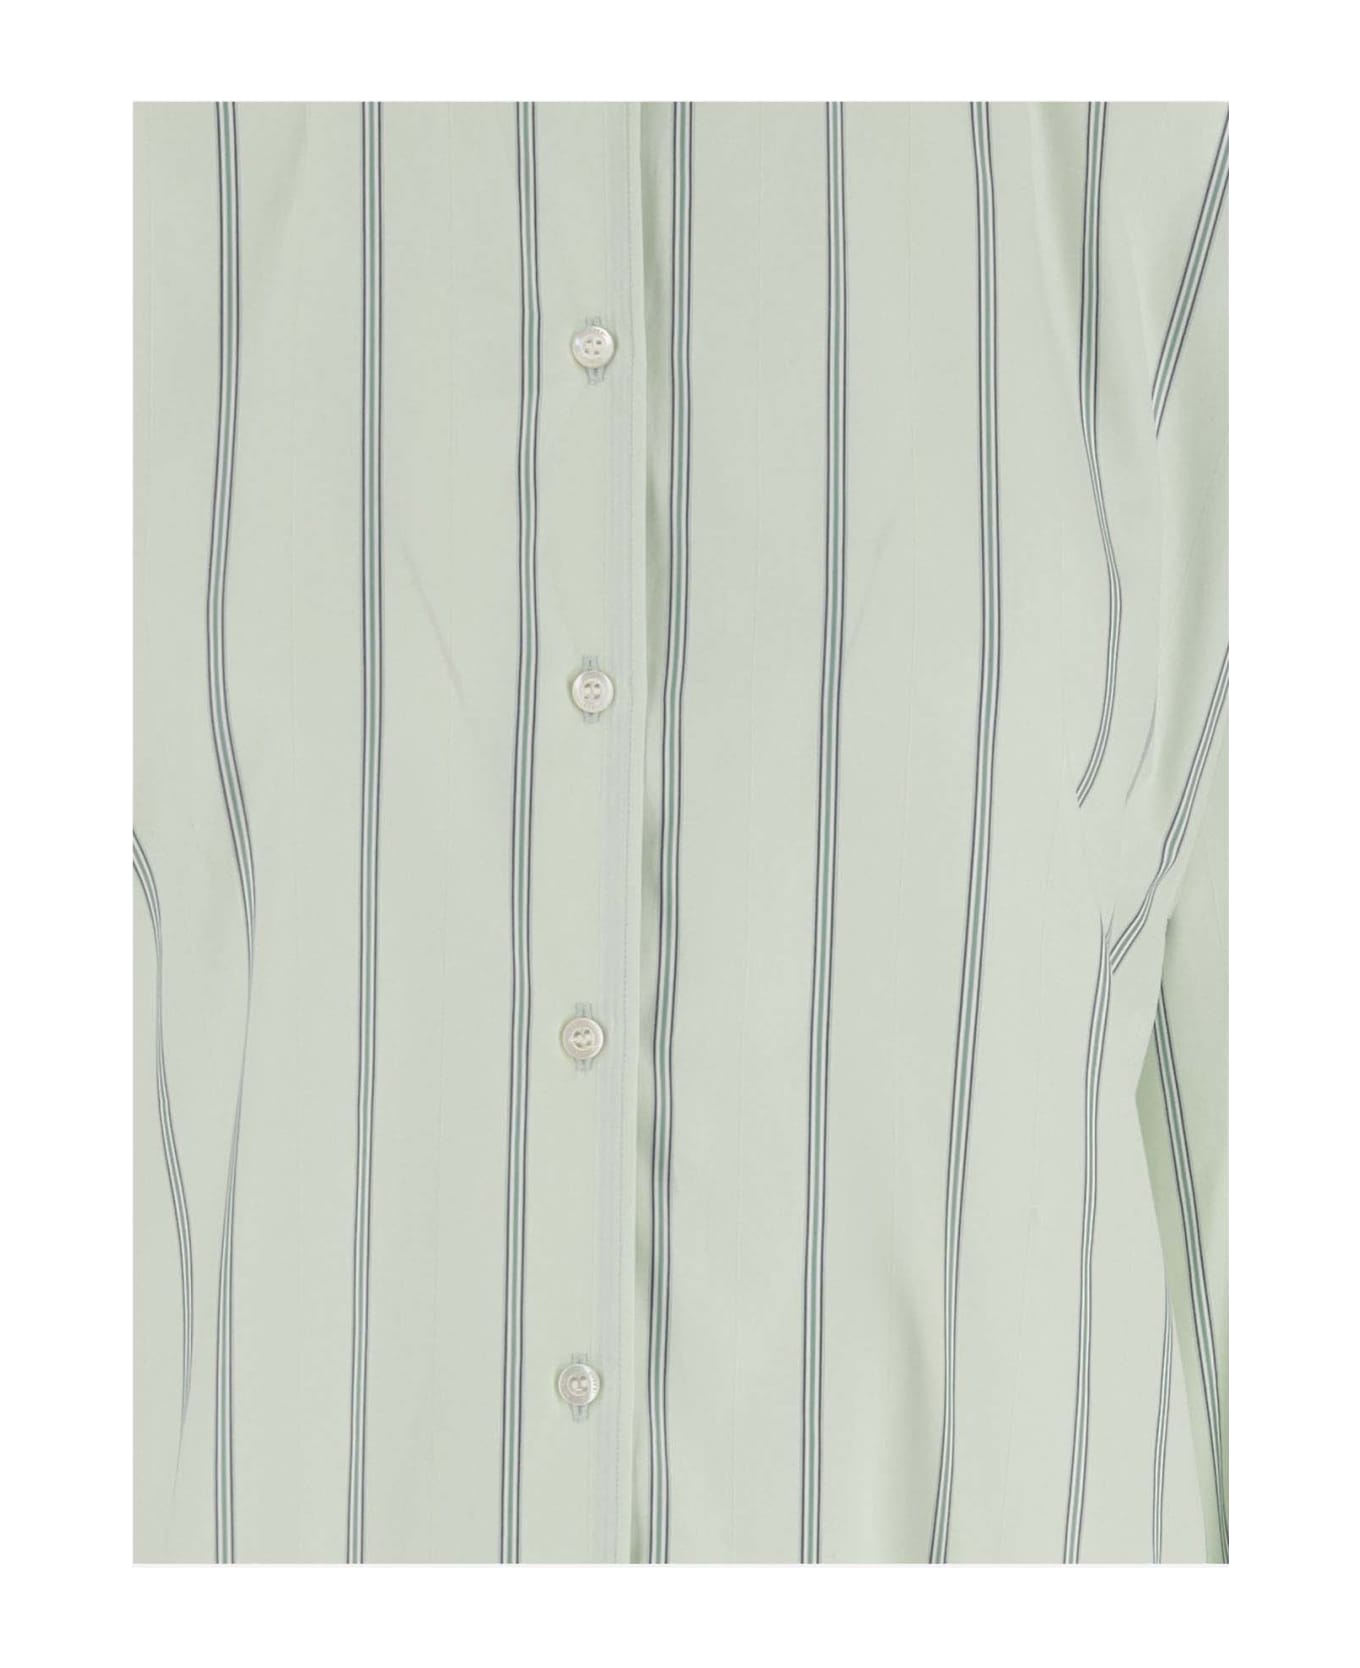 Aspesi Striped Shirt - Green シャツ